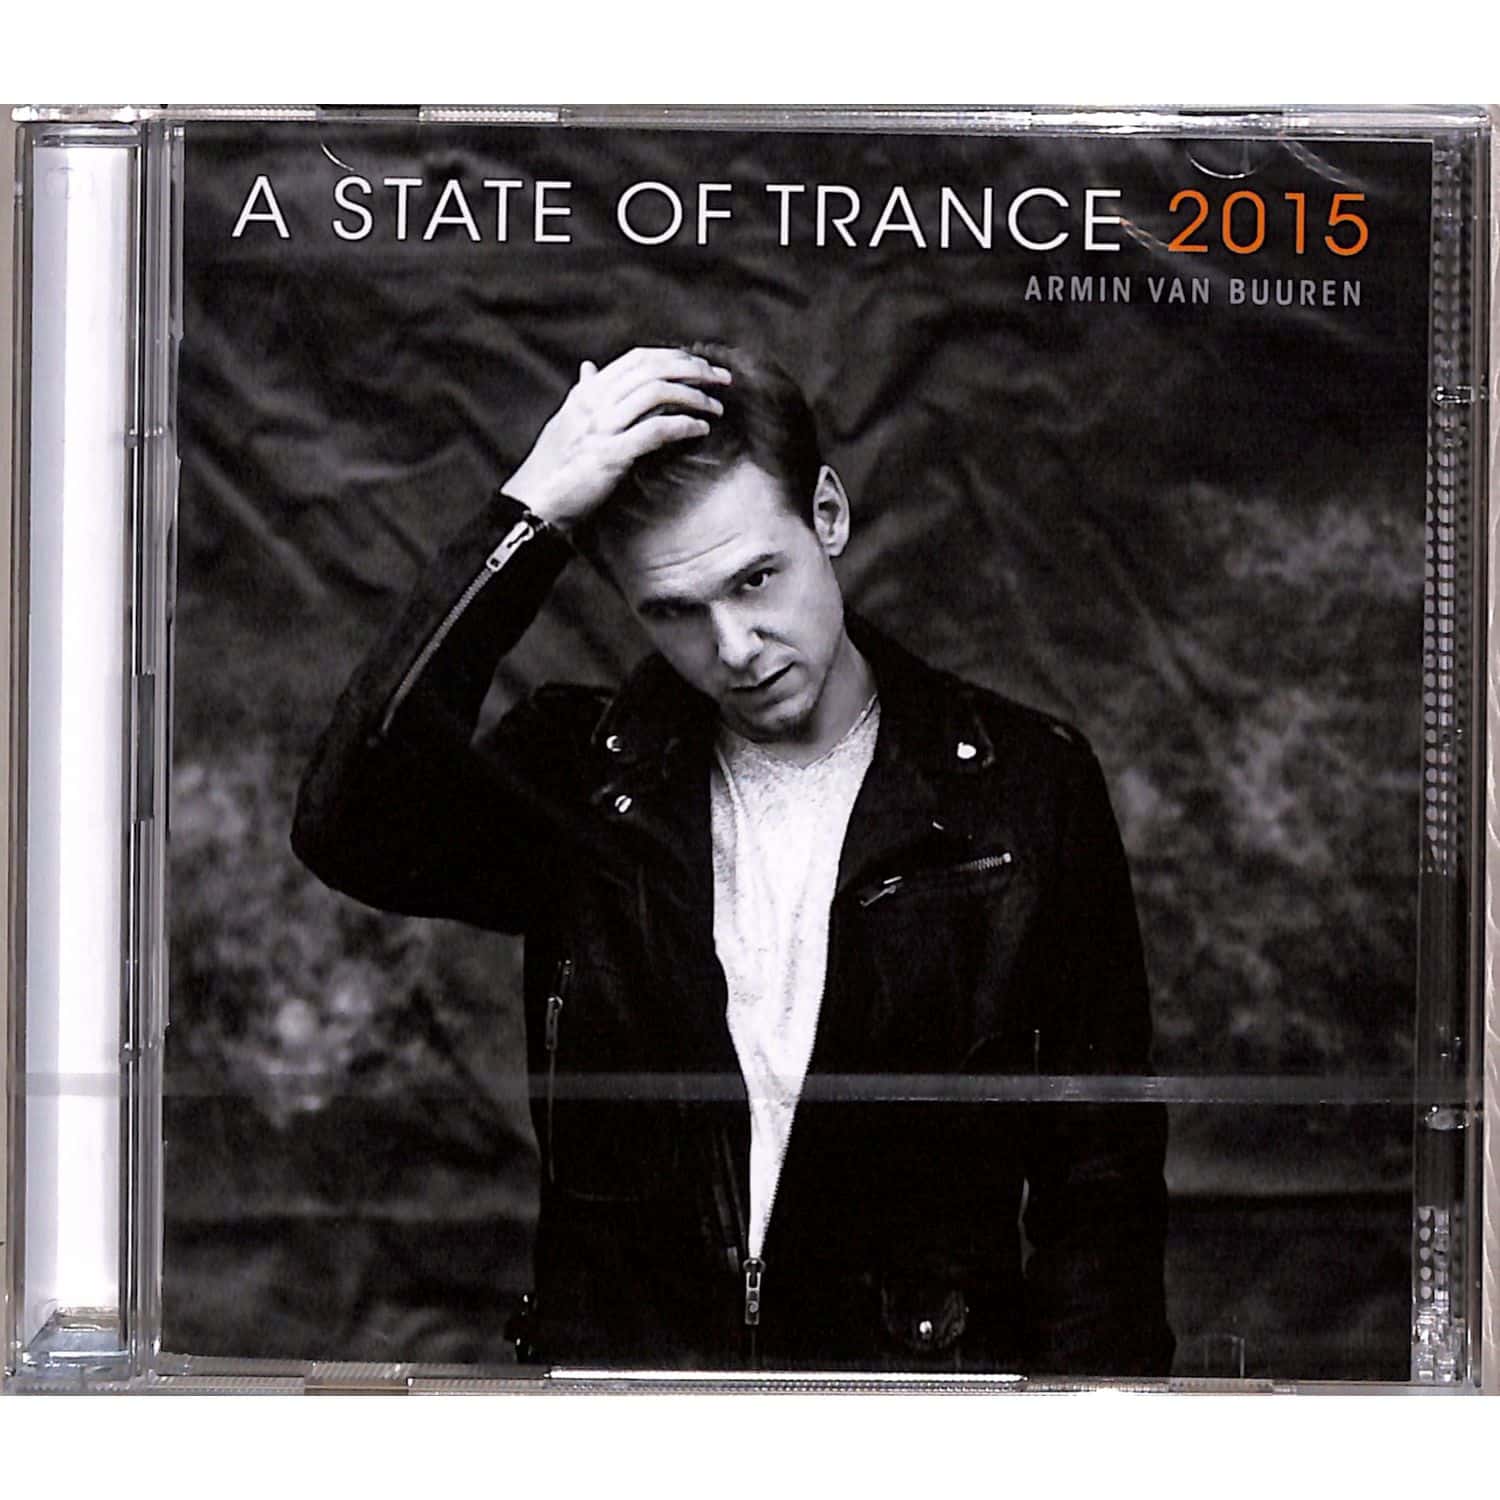 Armin van Buuren - A STATE OF TRANCE 2015 